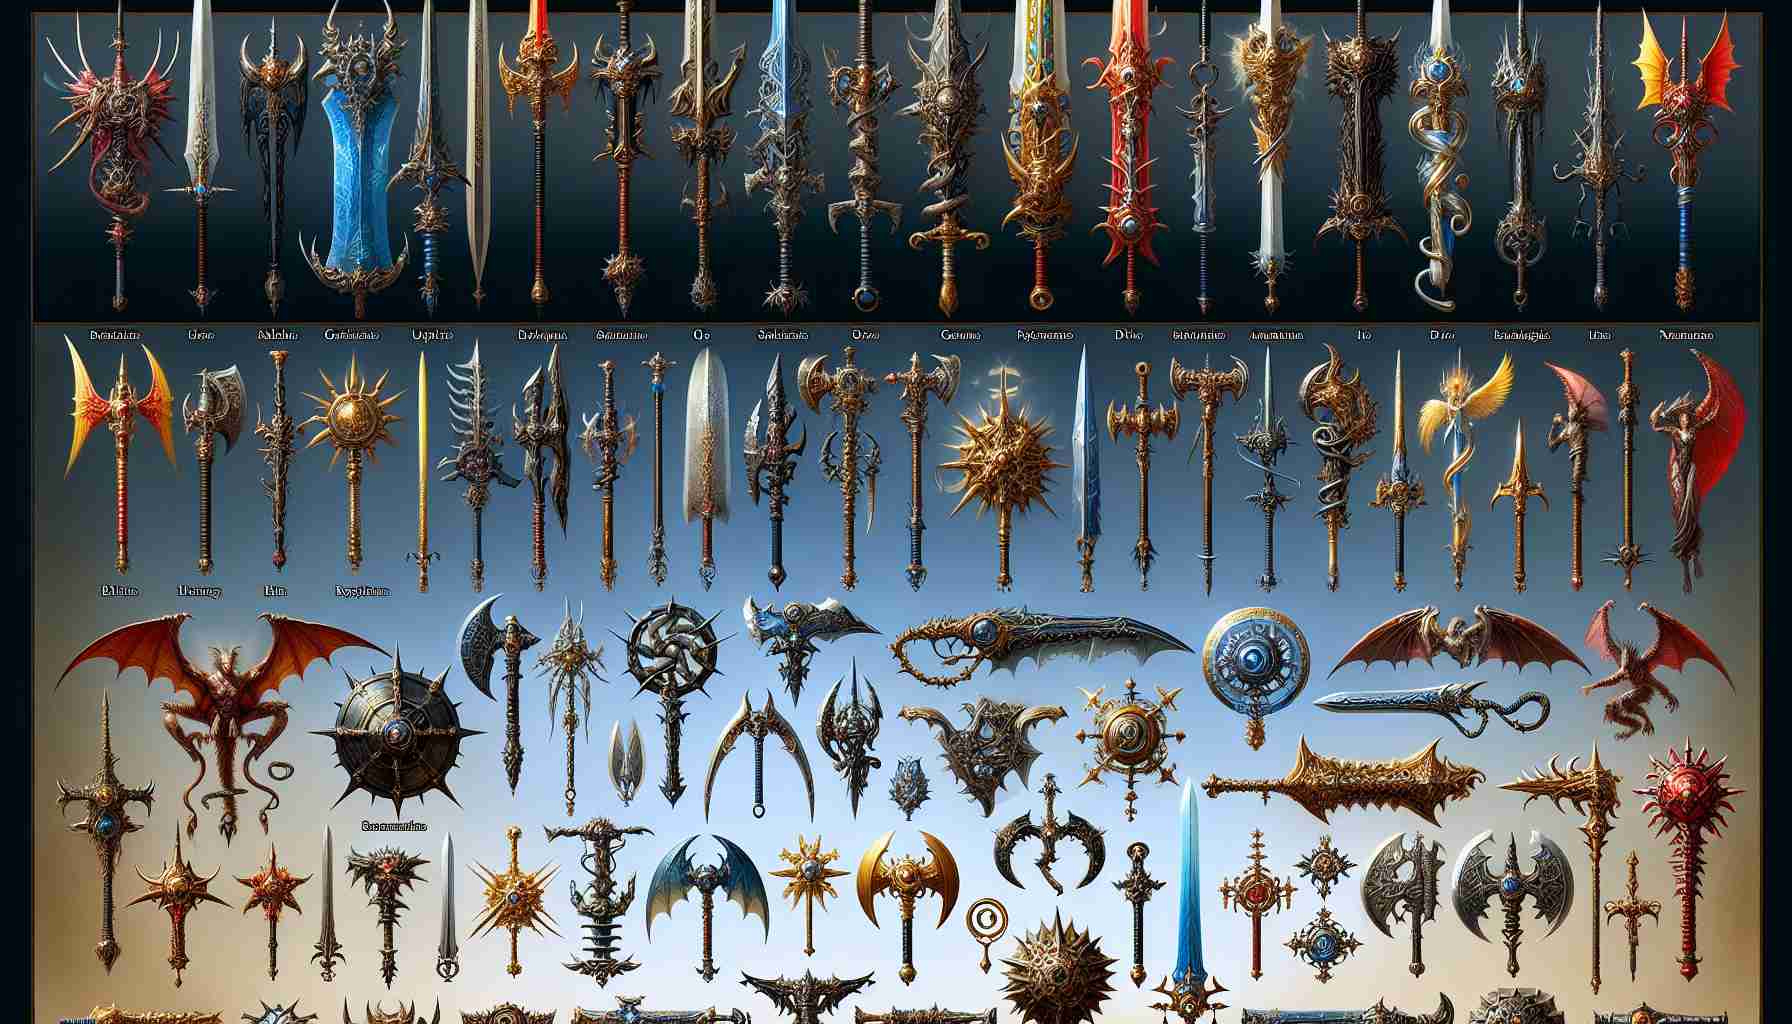 Summary: Ranking the Legendary Weapons in Baldur's Gate 3